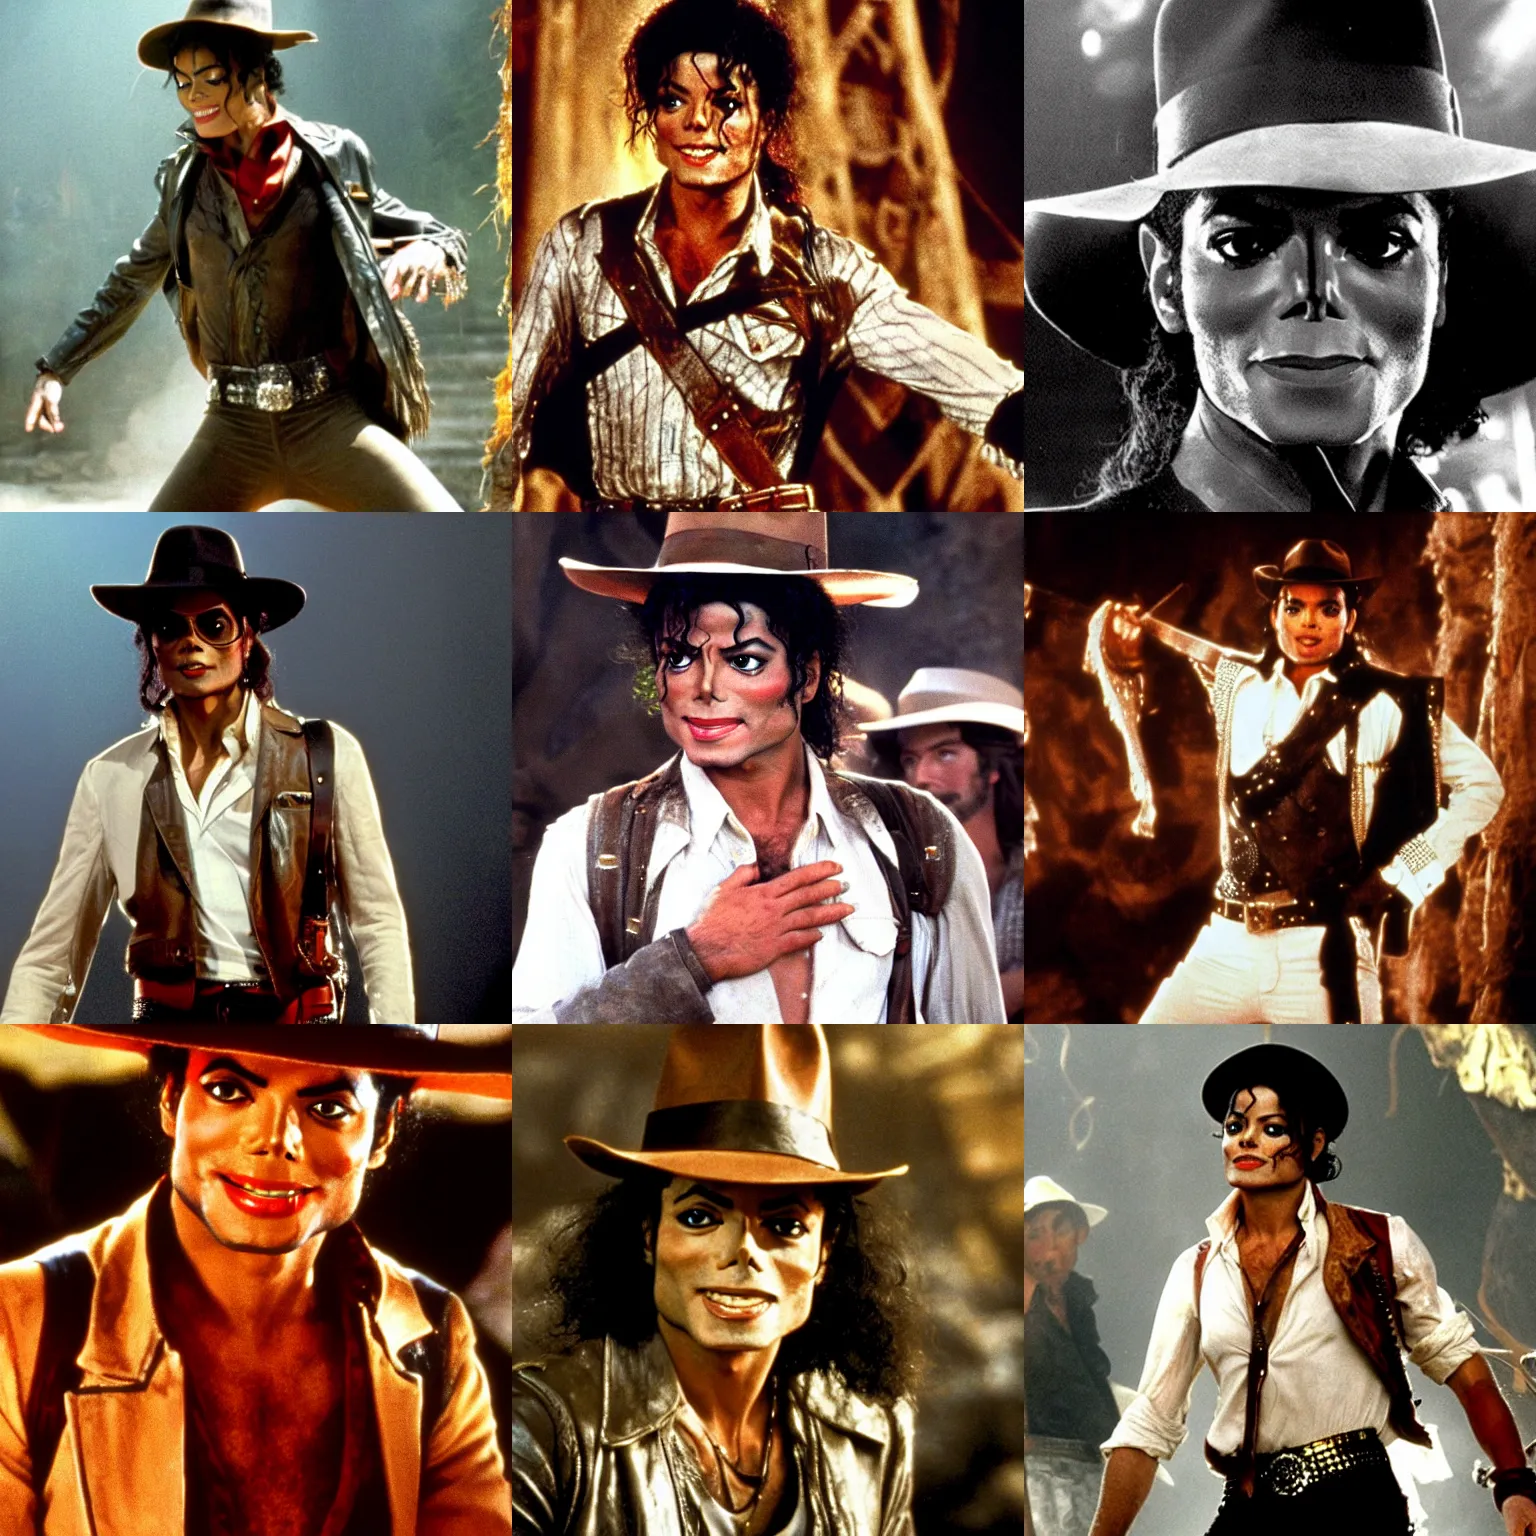 Prompt: Michael Jackson as Indiana Jones, Still from Temple of Doom (1984)